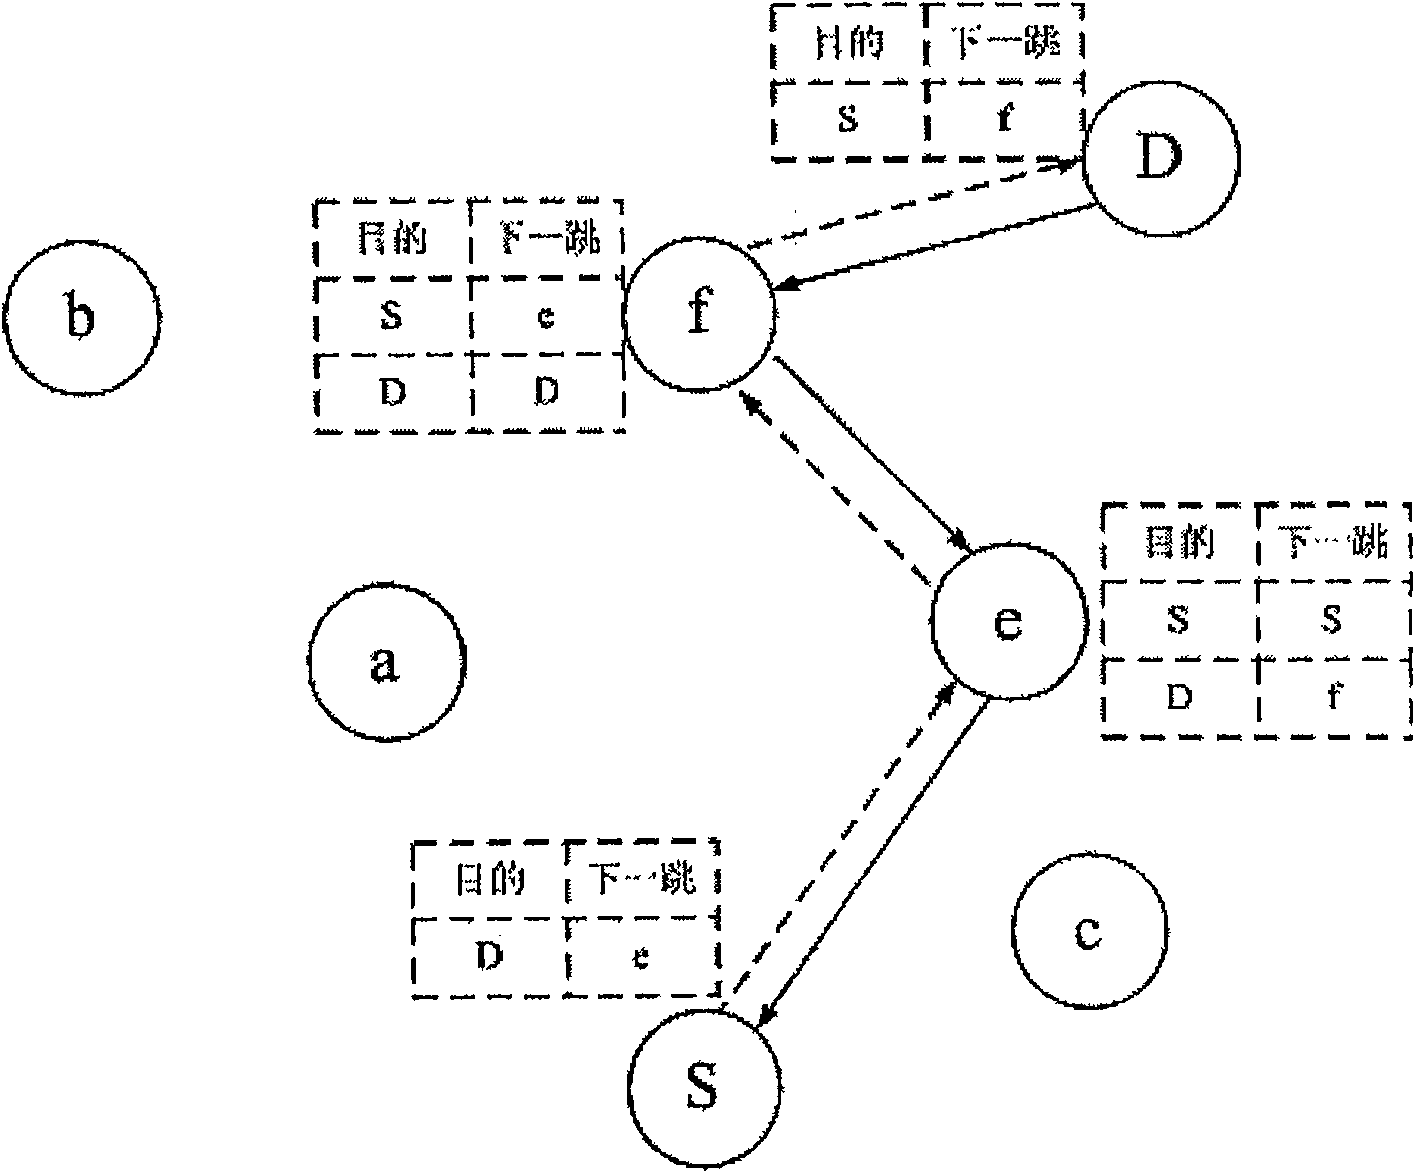 A method for route establishment under unidirectional link environment